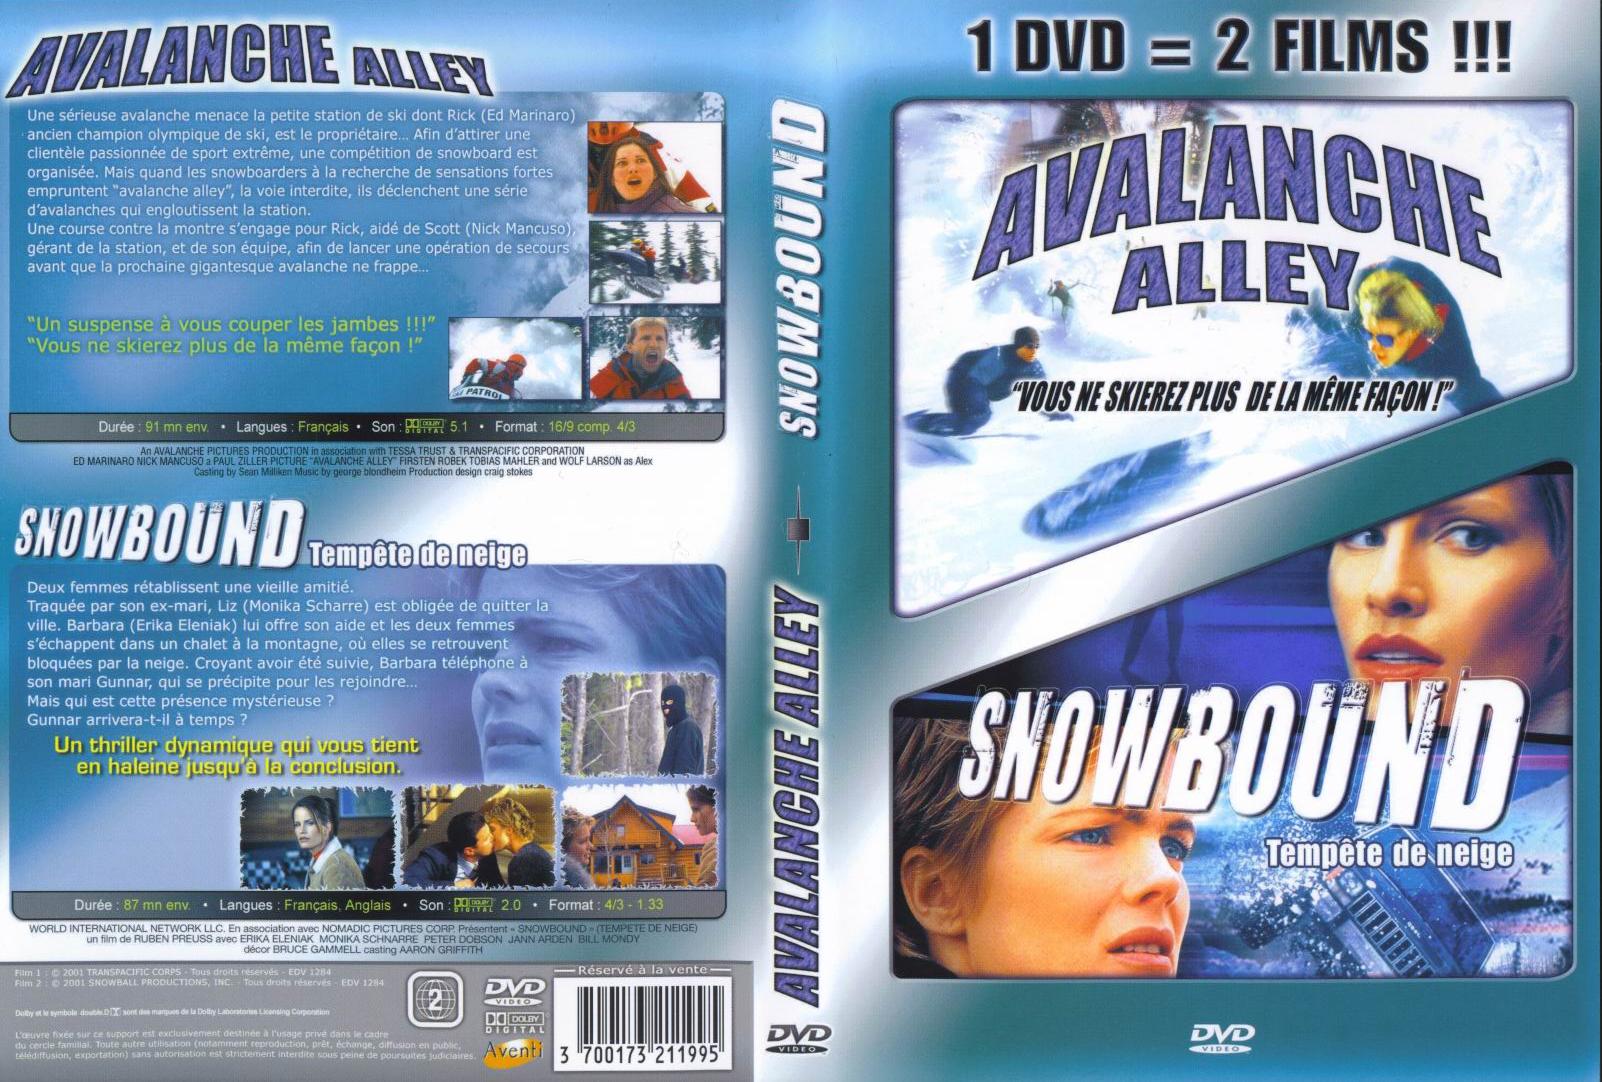 Jaquette DVD Avalanche alley + snowbound tempete de neige